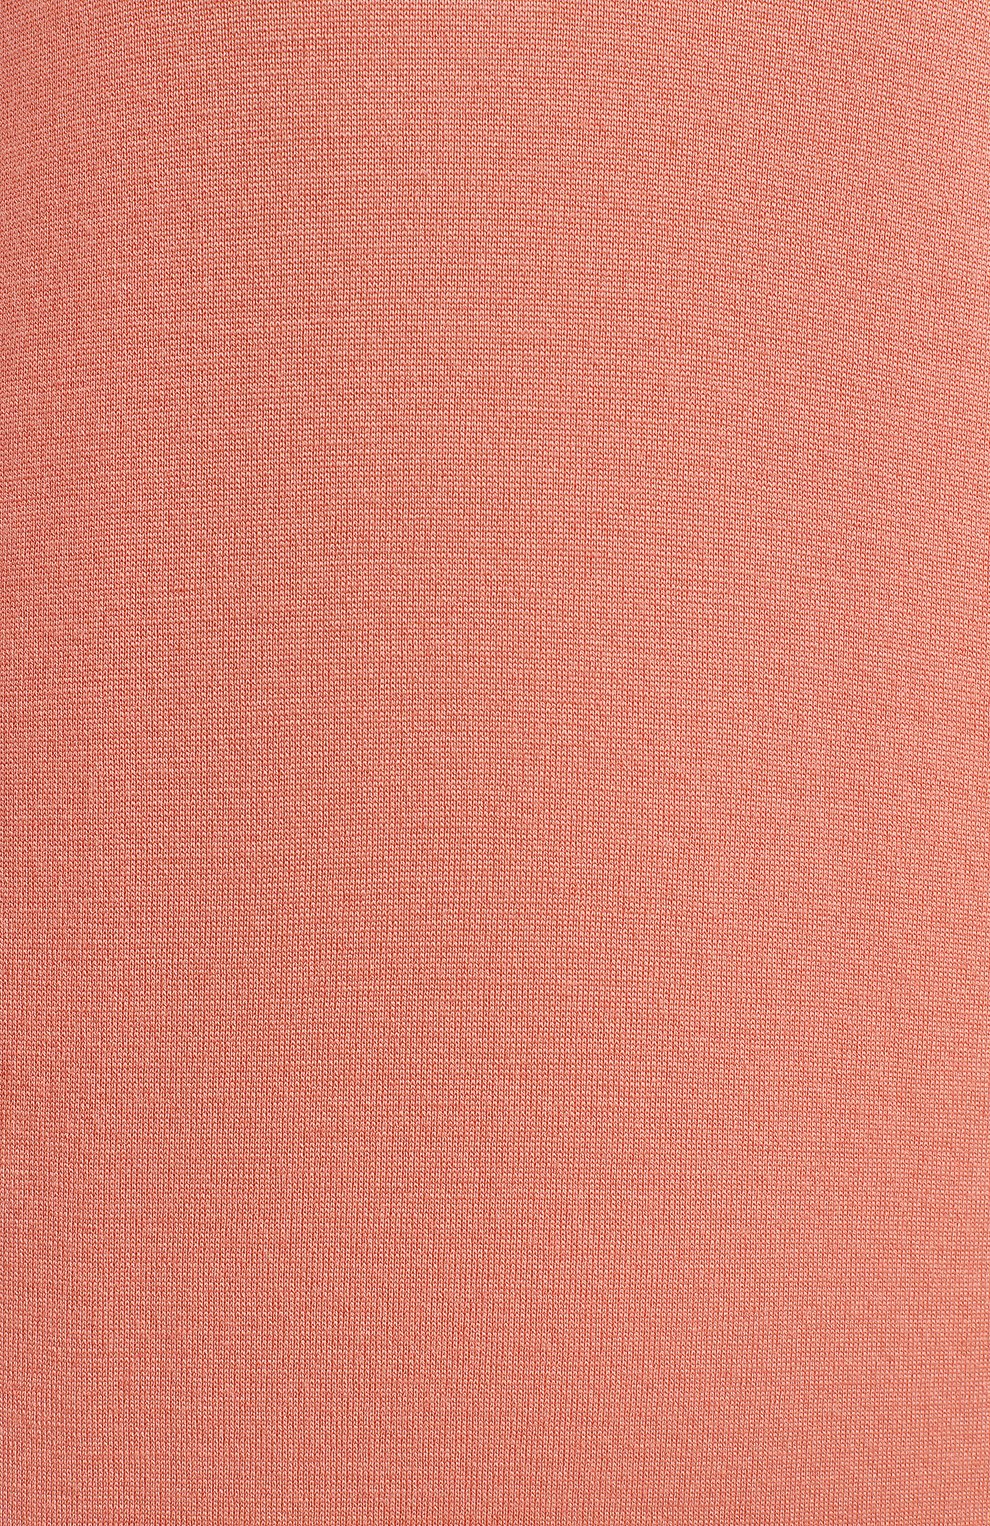 Пуловер из шерсти и шелка | Iris Von Arnim | Розовый - 3